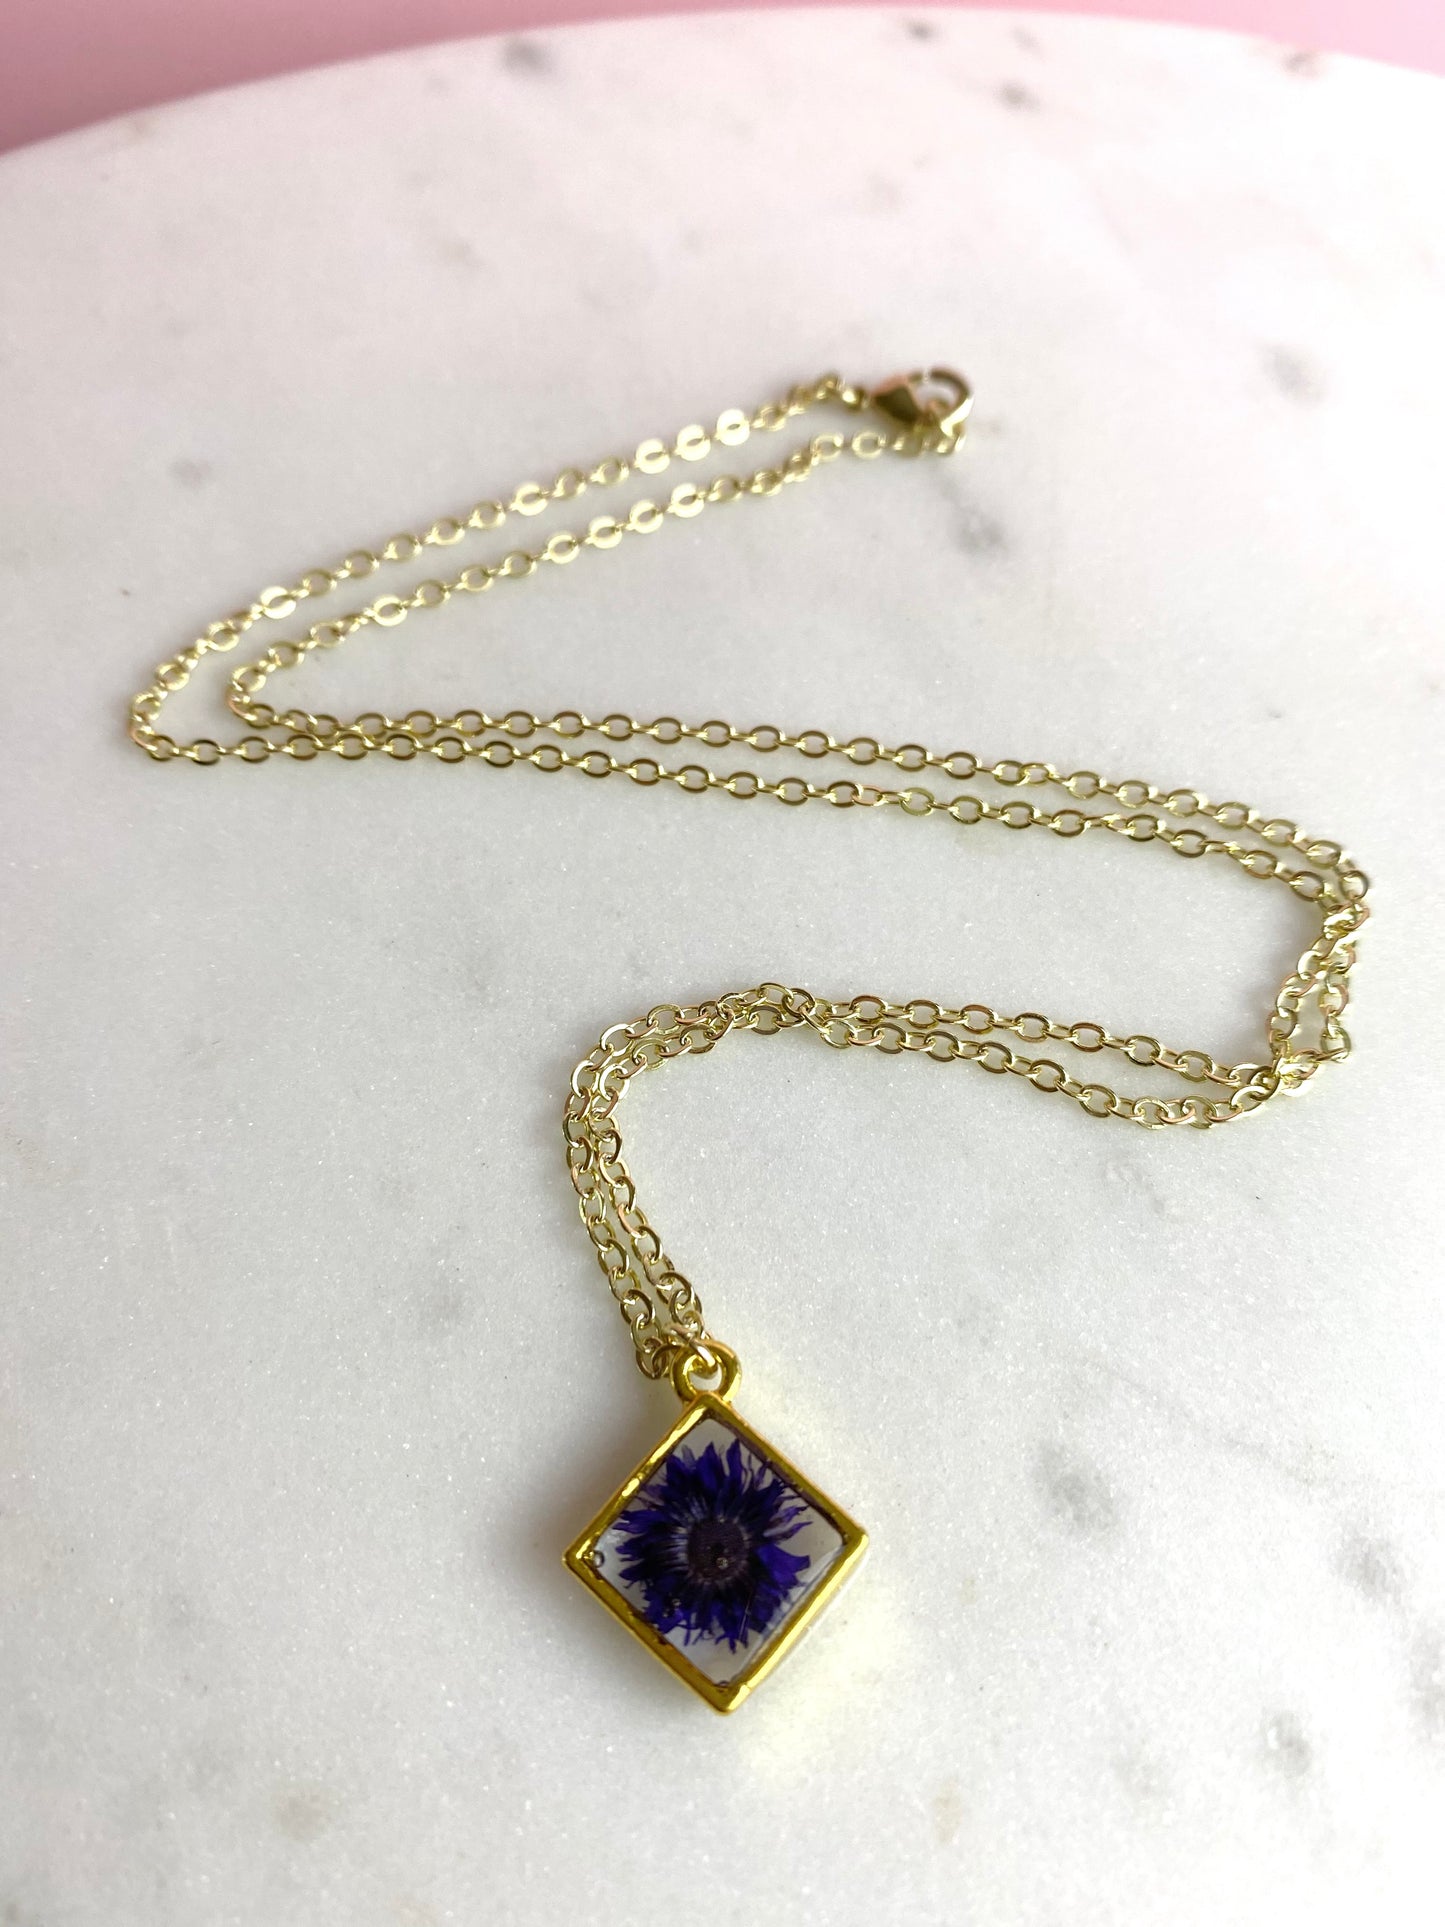 Pressed Flower Necklace | Navy Blue Daisy Diamond | Handmade Jewelry